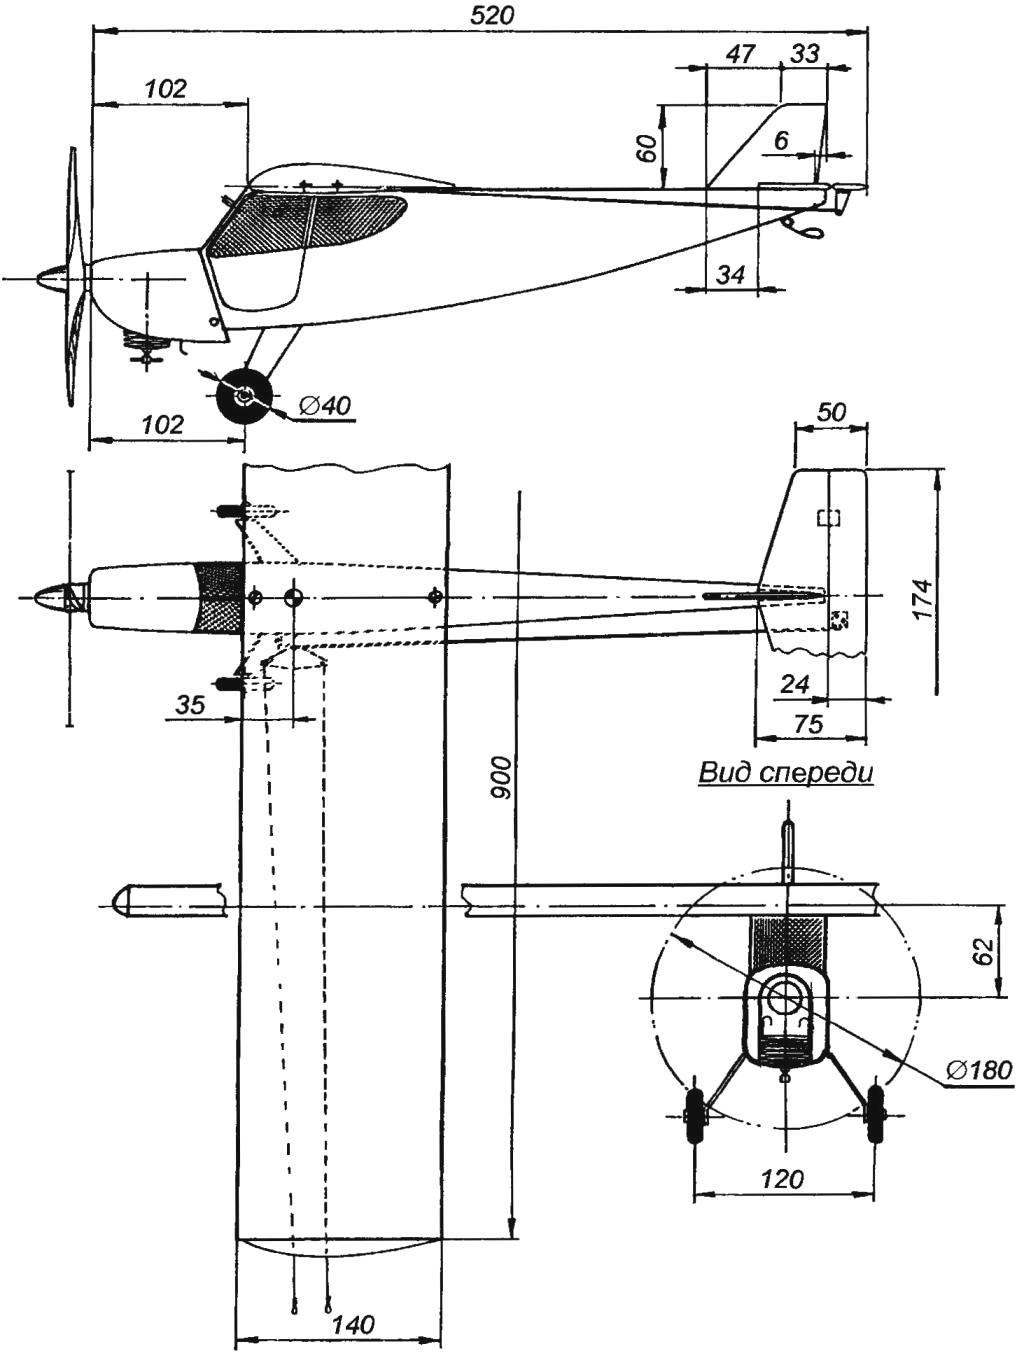 Geometry córdoba aircraft model-high wing with engine MK-17